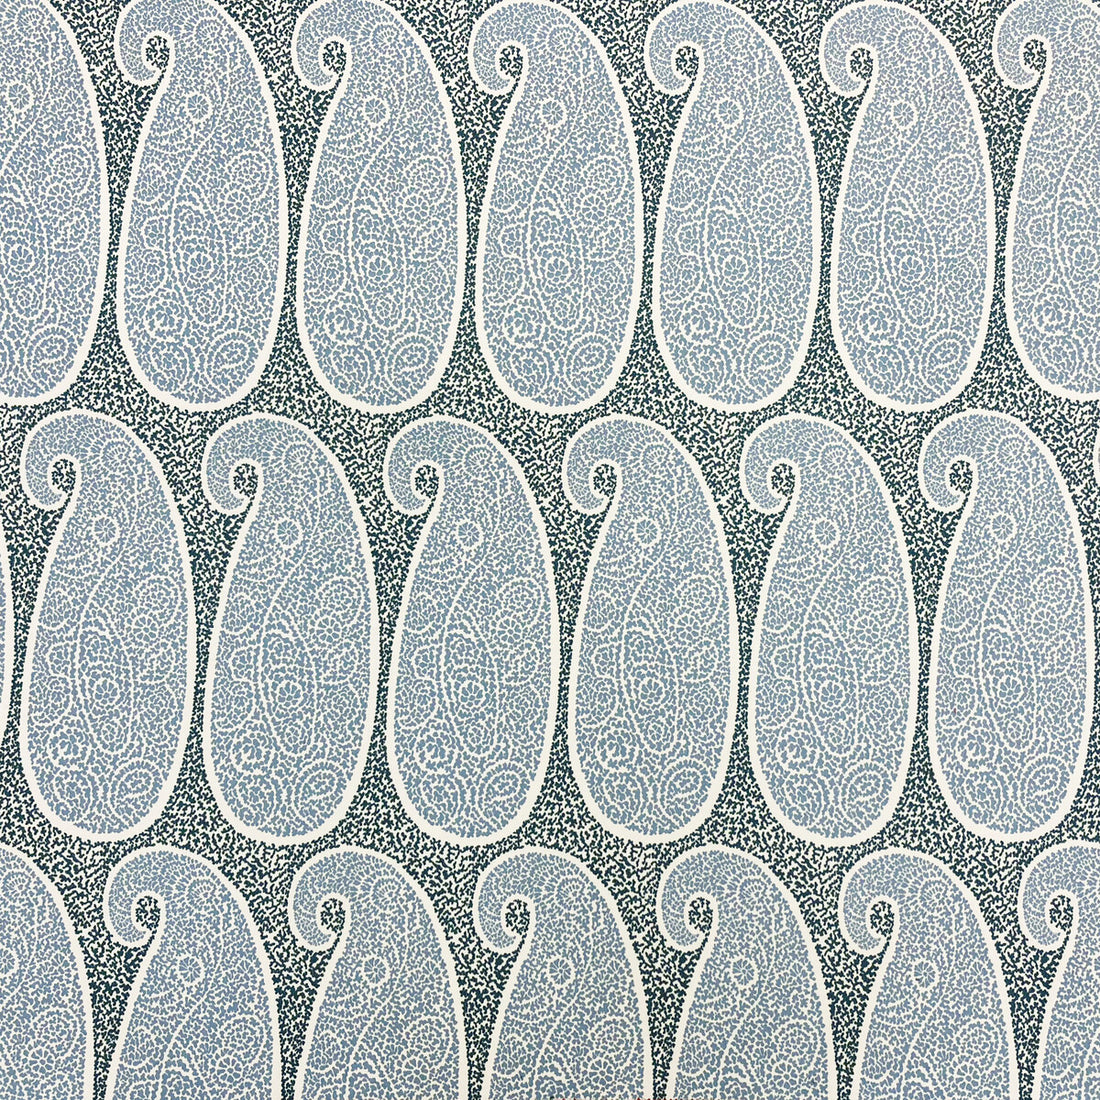 Yaiza fabric in azul color - pattern LCT1023.006.0 - by Gaston y Daniela in the Lorenzo Castillo V collection